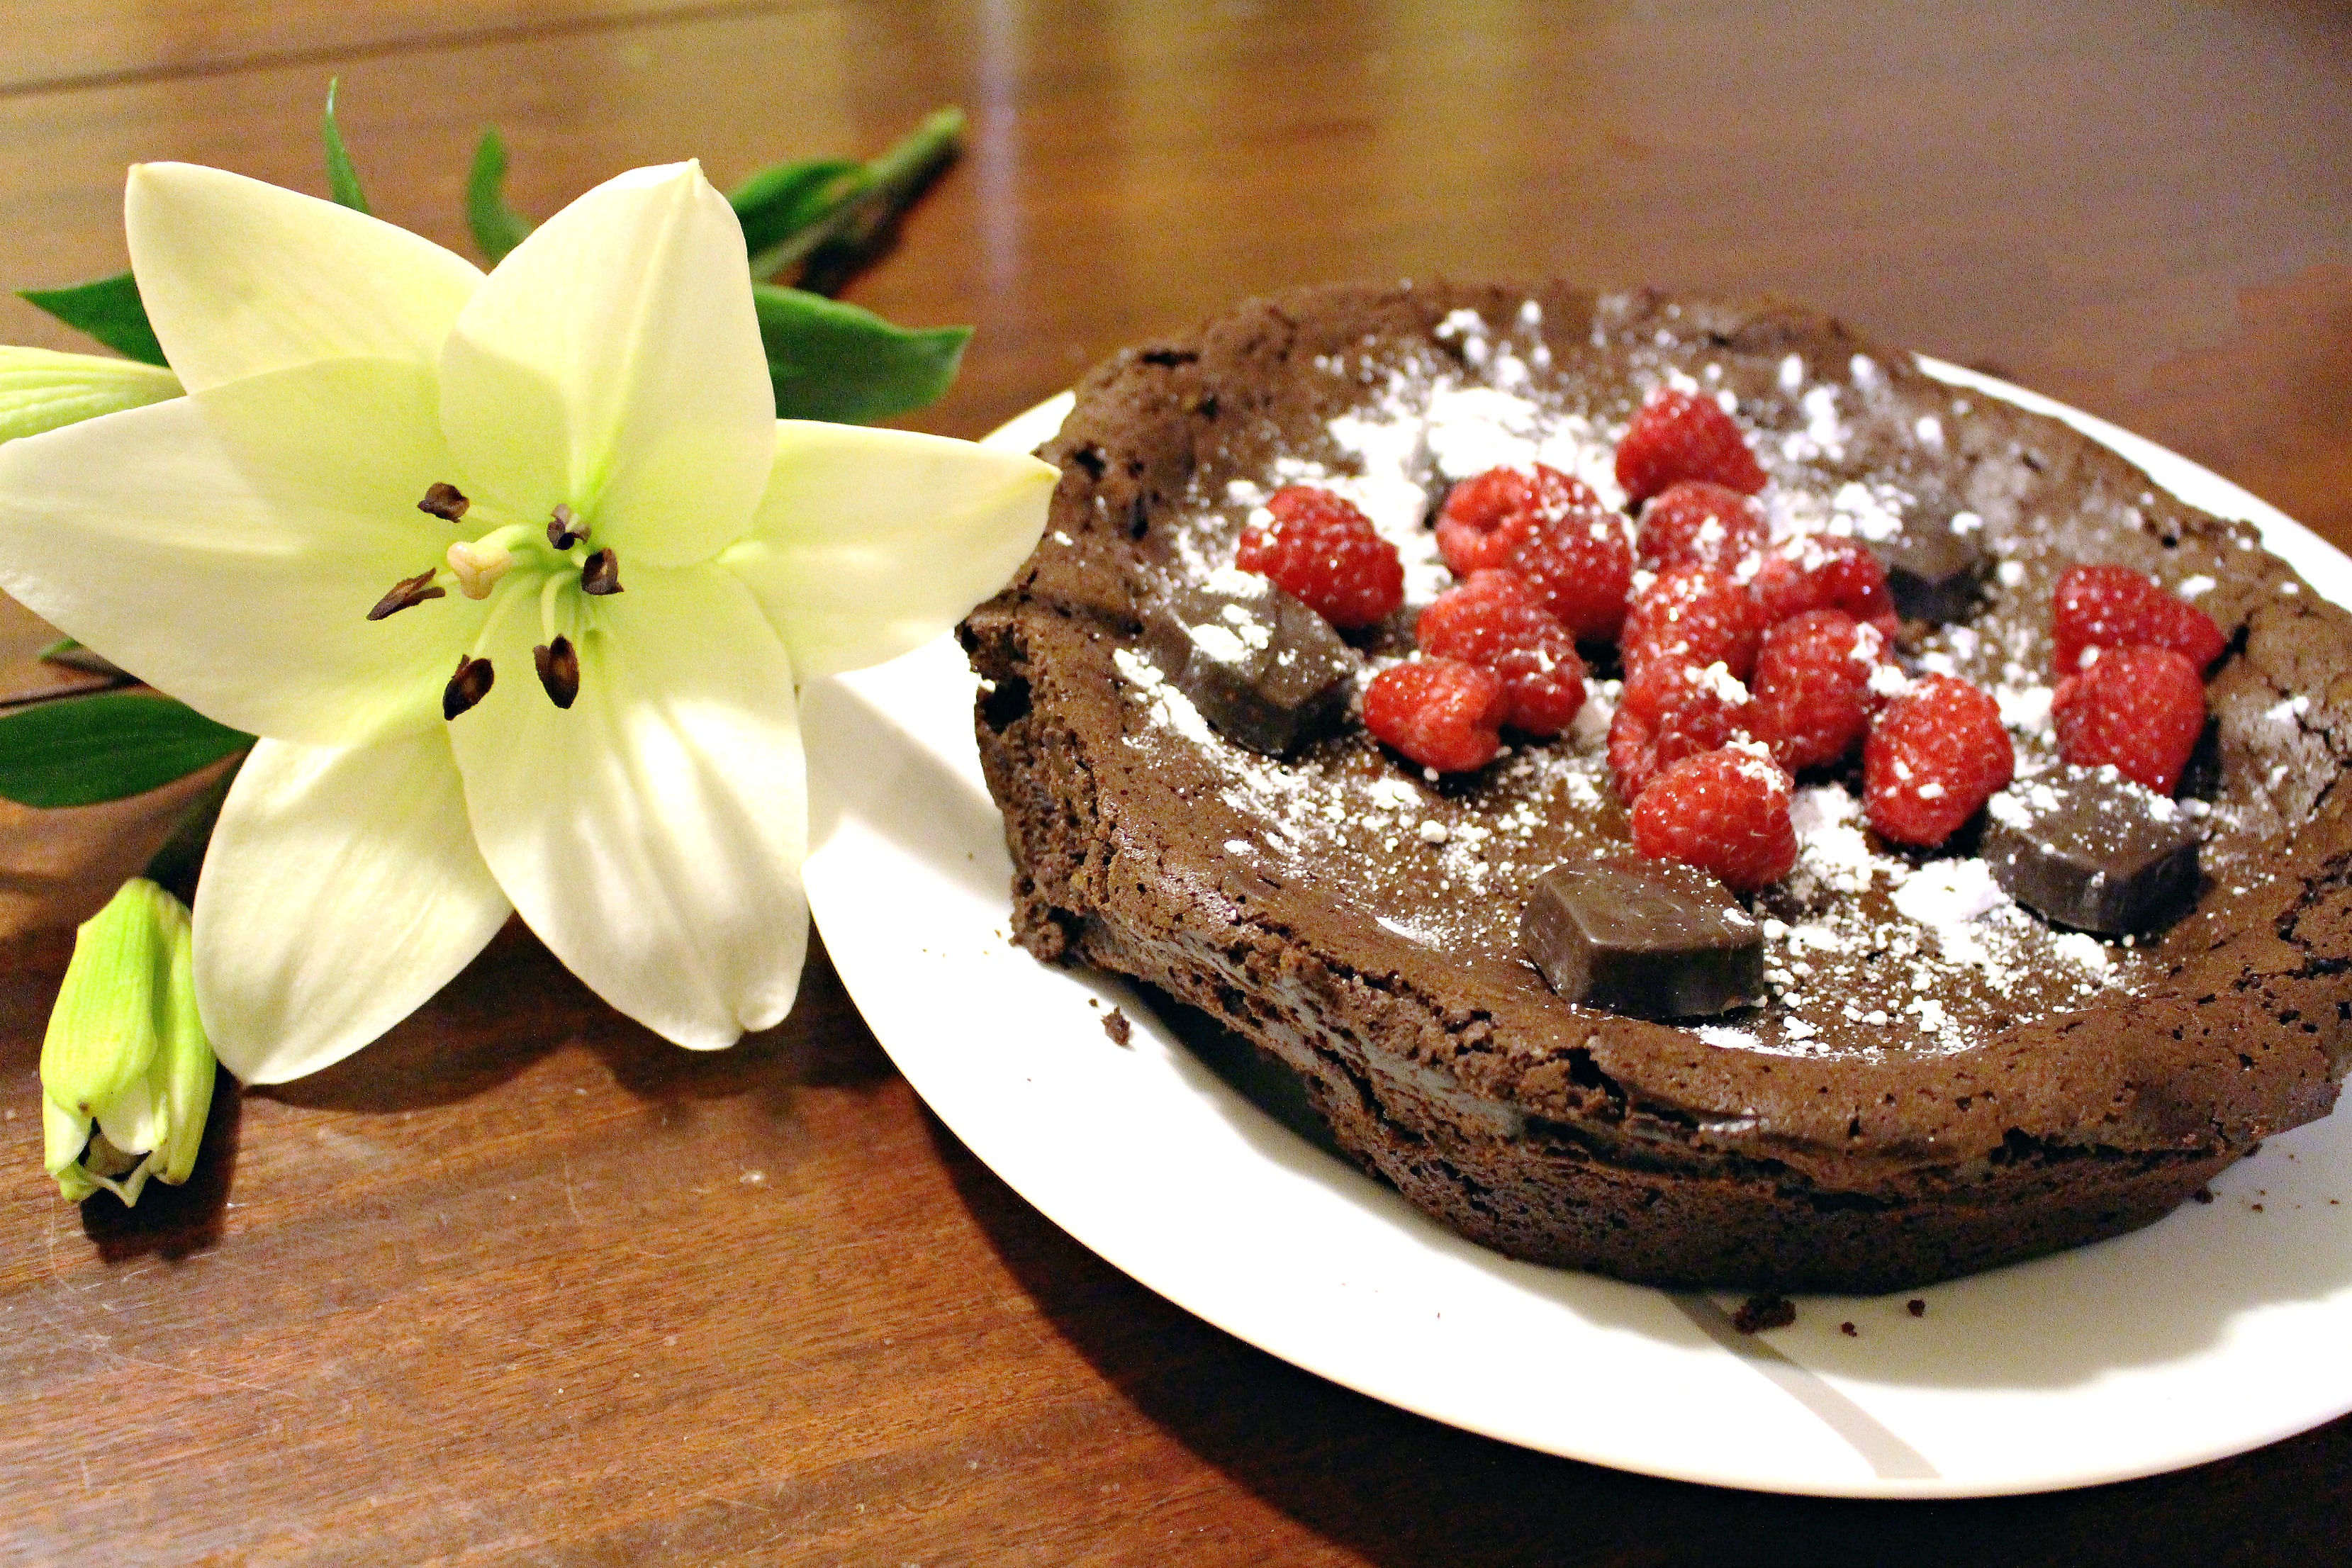 flourless chocolate torte